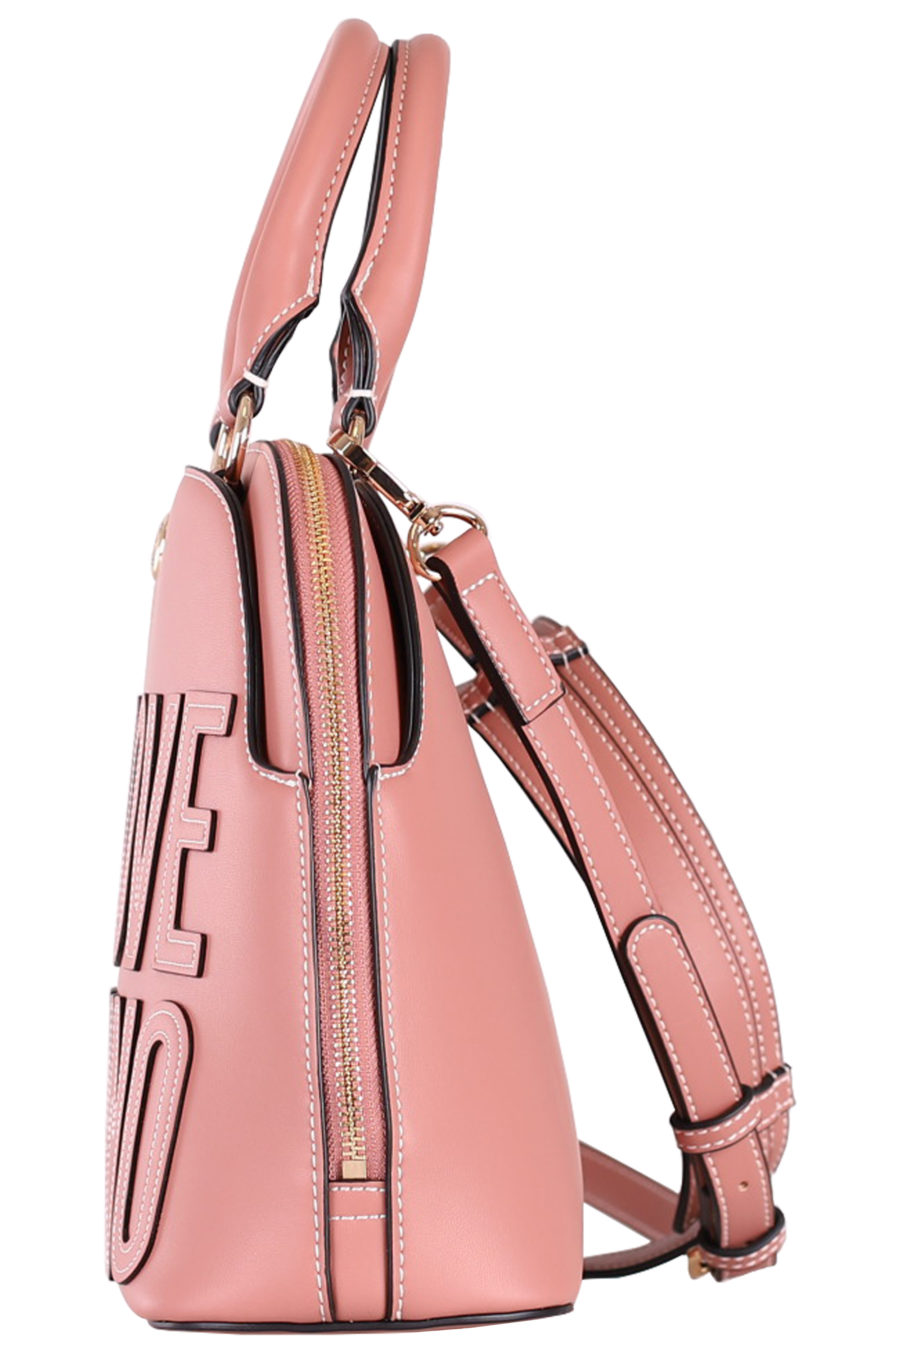 Bolso de mano de color rosa pálido con logo bordado - IMG 6647